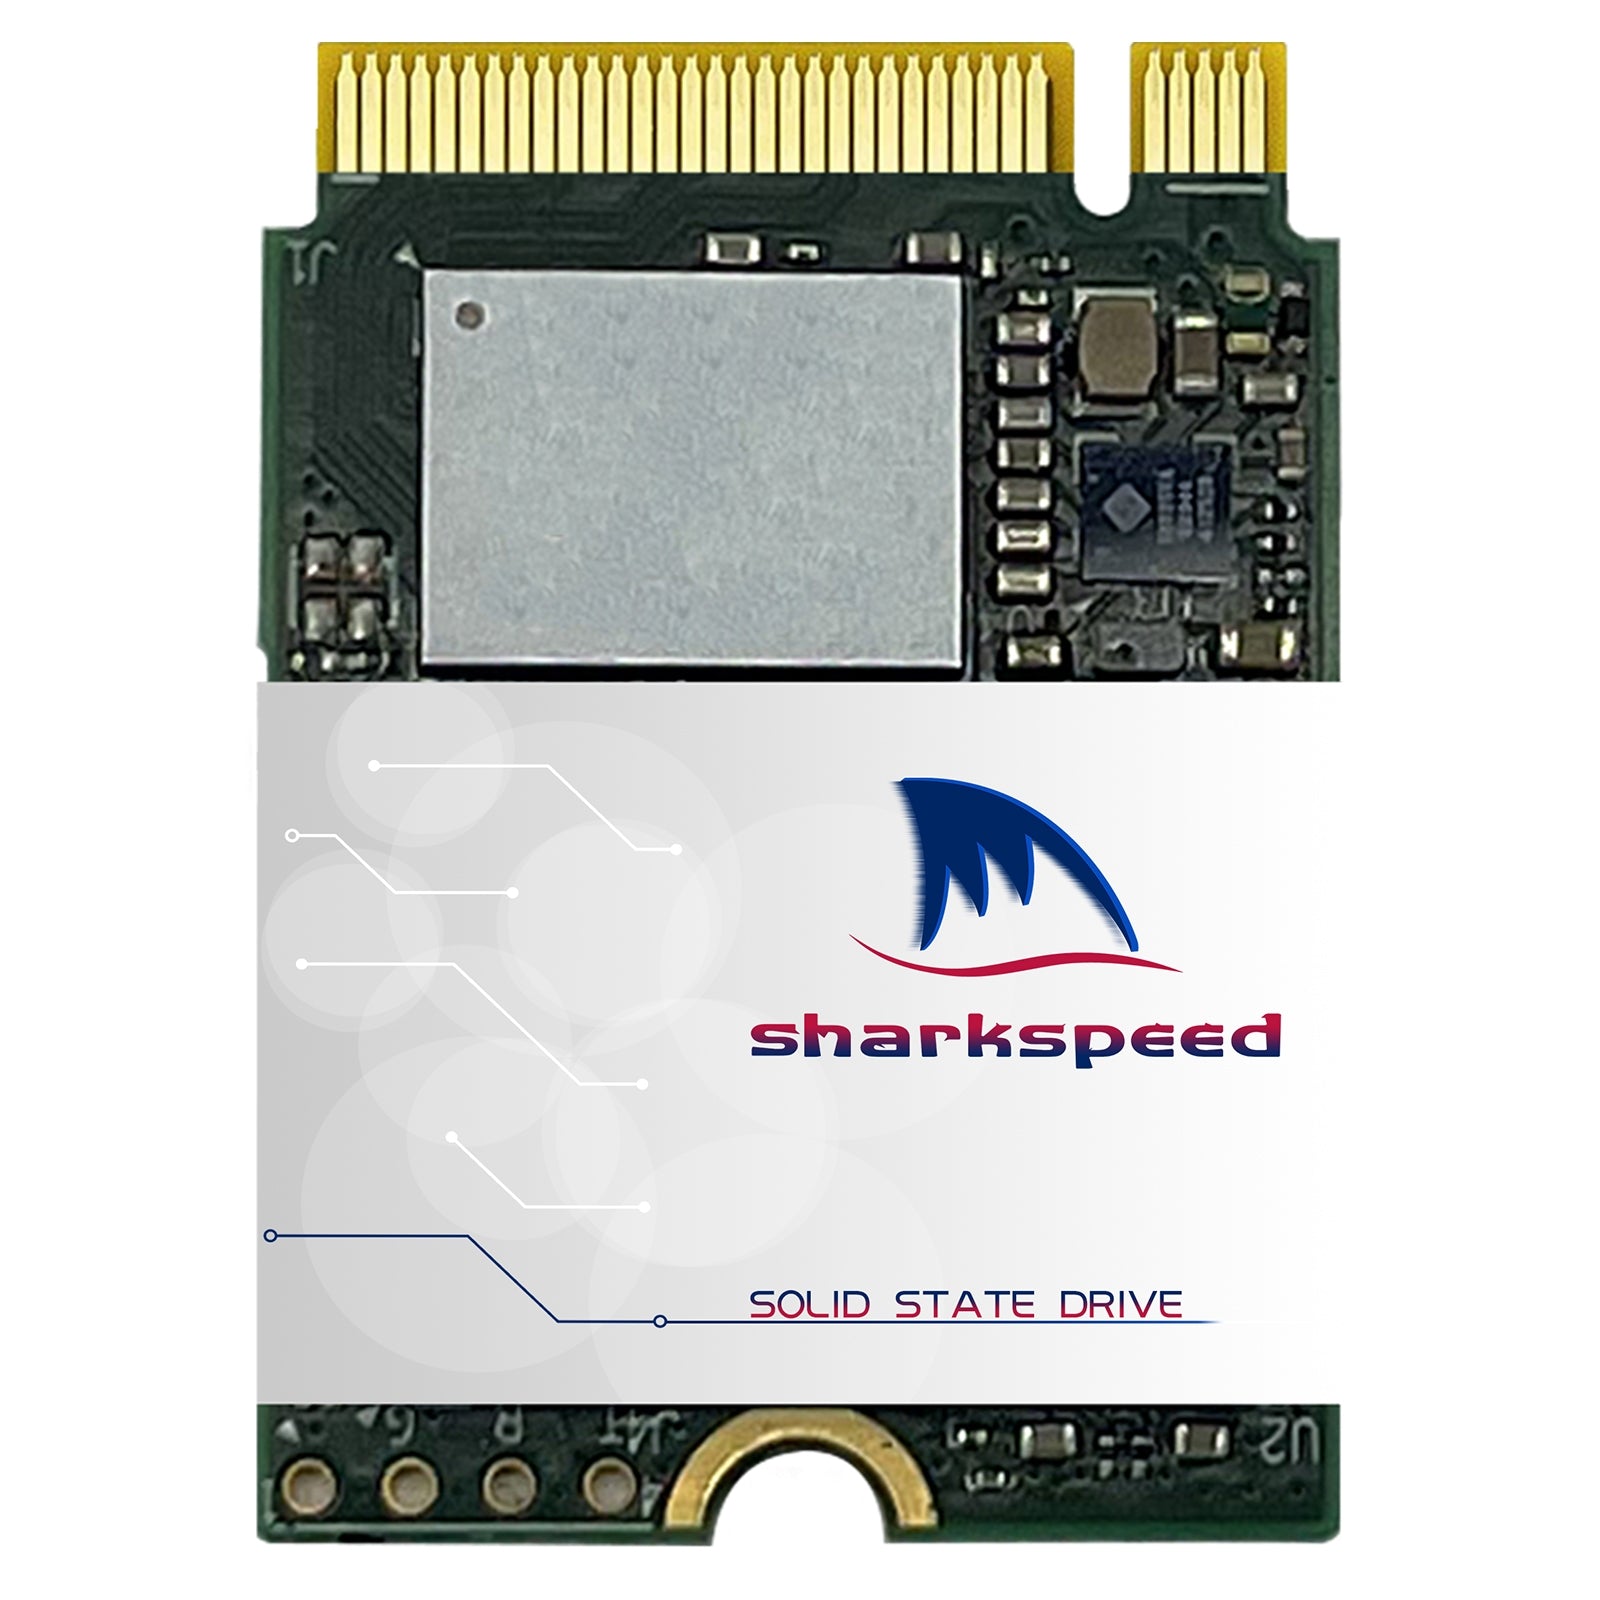 SSD 1TB M.2 2230 NVMe PCIe Gen 3.0X4 SSHARKSPEED Internal Solid State  Drive, Compatible with Steam Deck, Microsoft Surface, Ultrabook, Laptop,  Desktop 